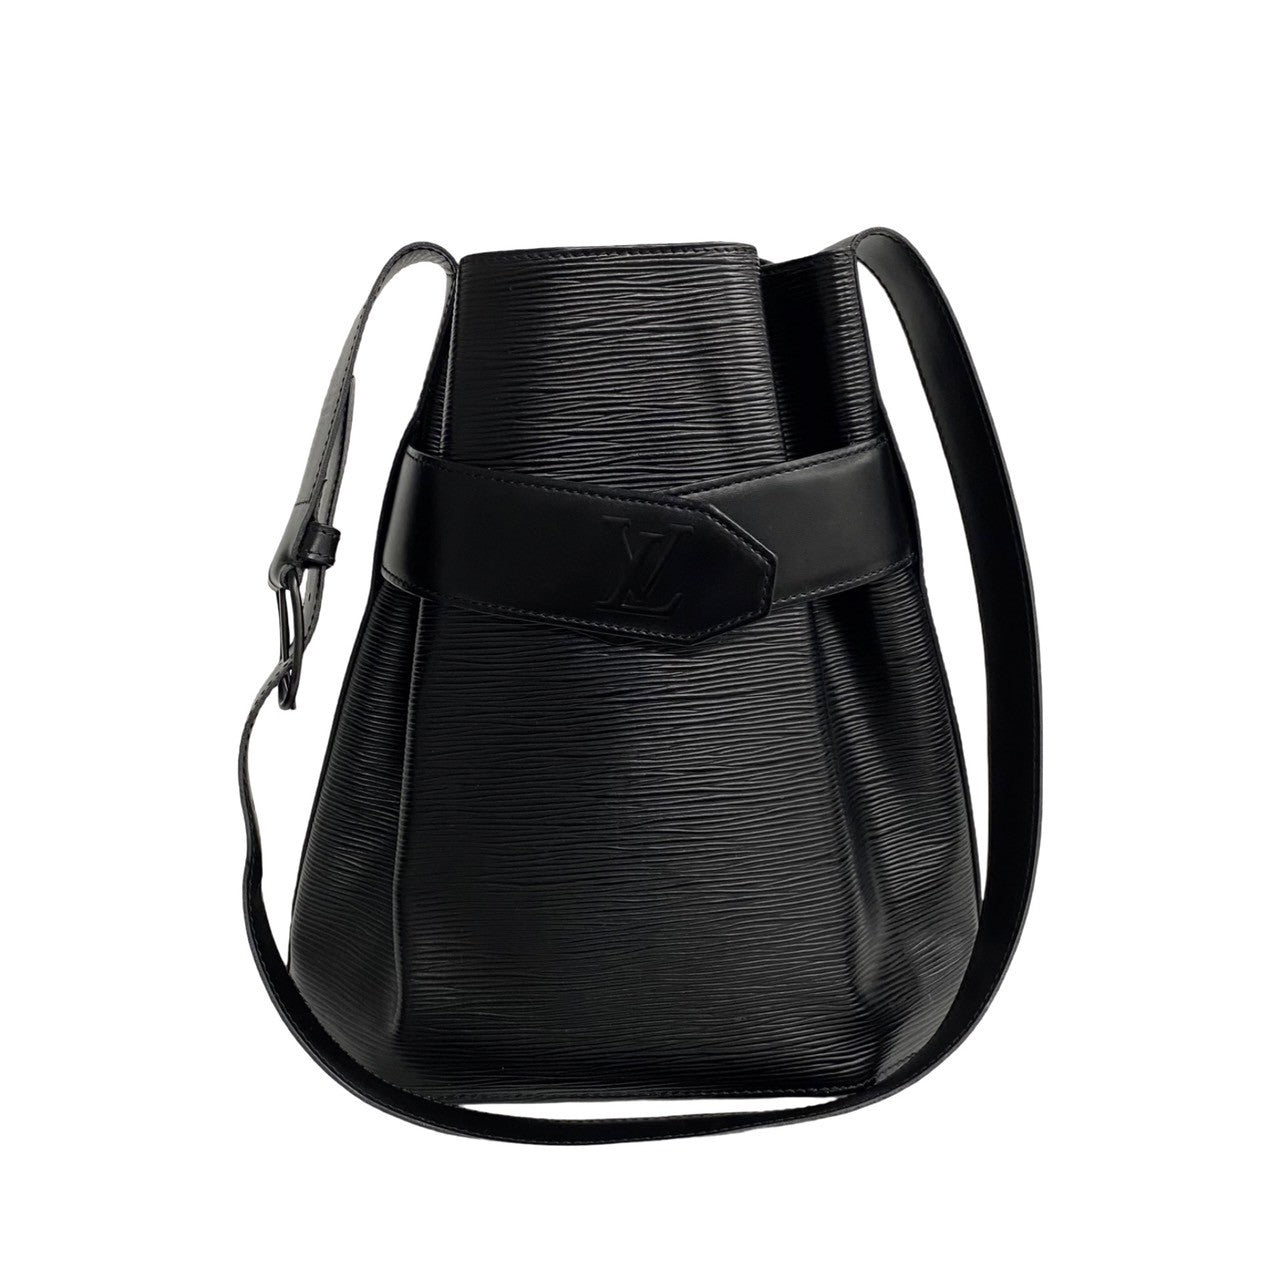 Louis Vuitton Sac DePaul GM Leather Shoulder Bag M80155 in Excellent condition